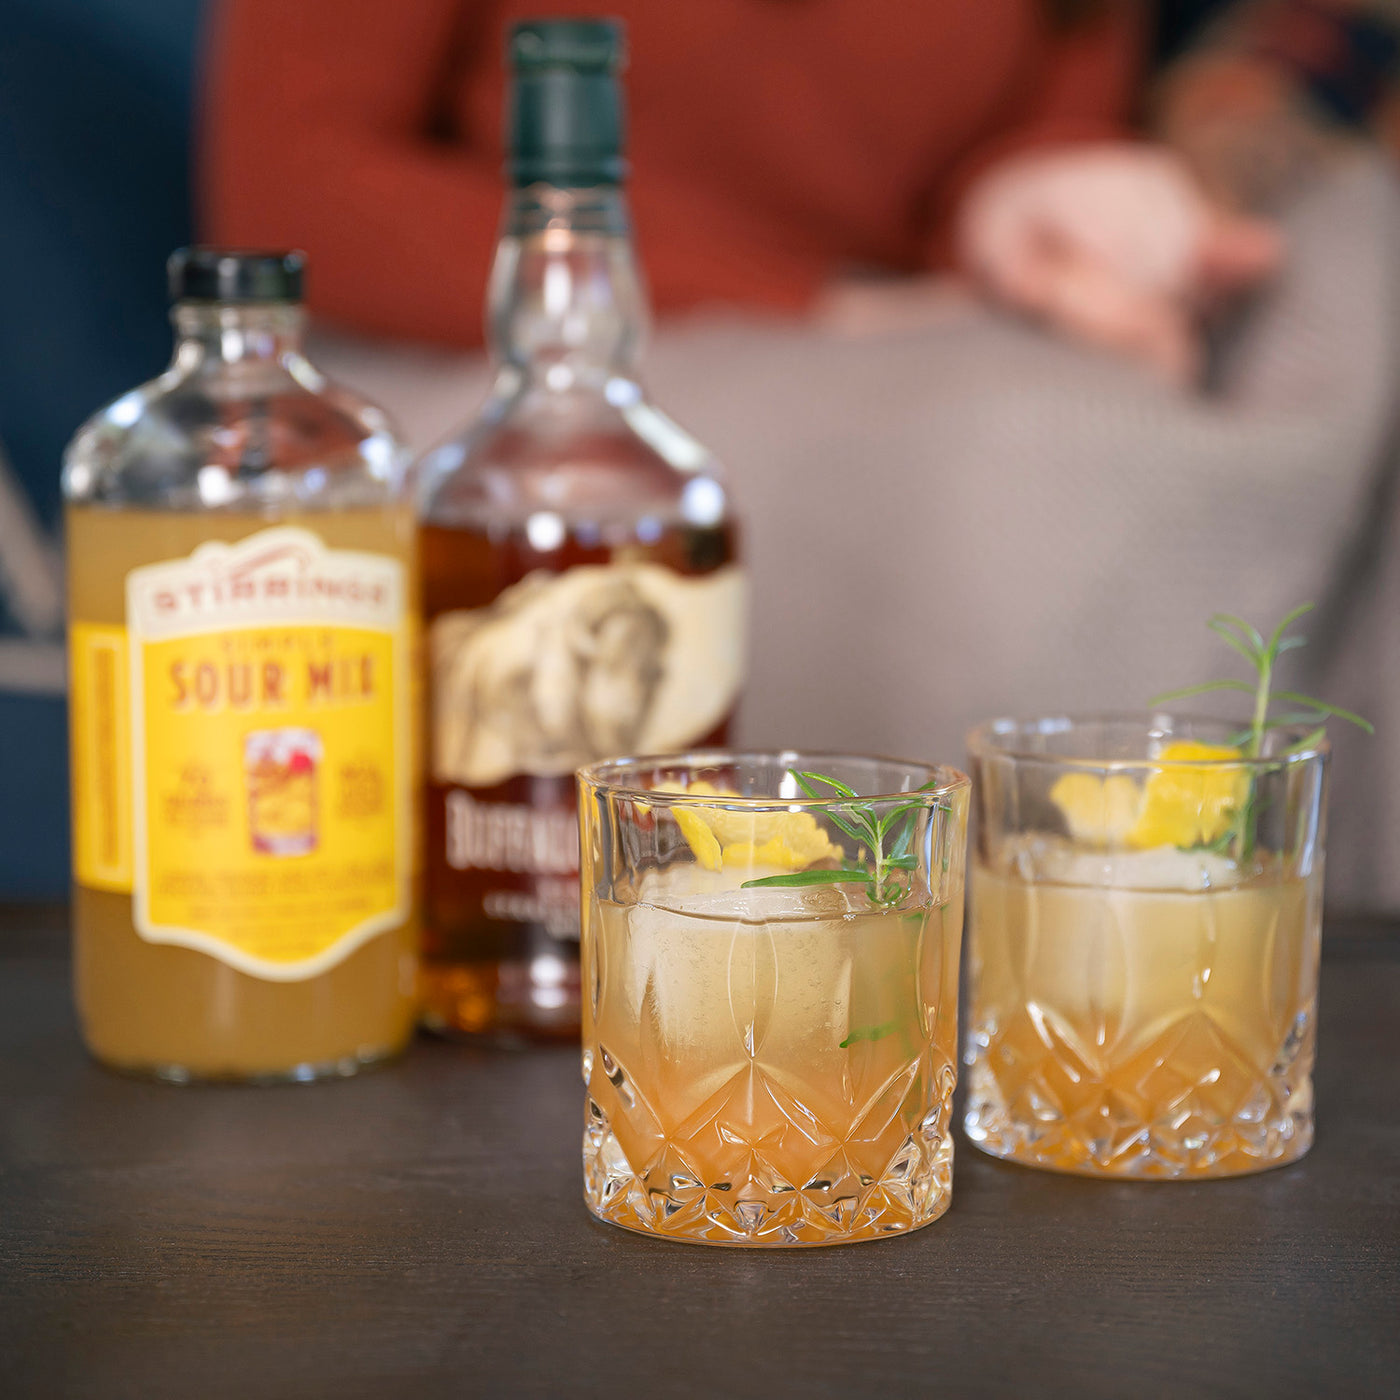 Cocktail Minis – Stirrings